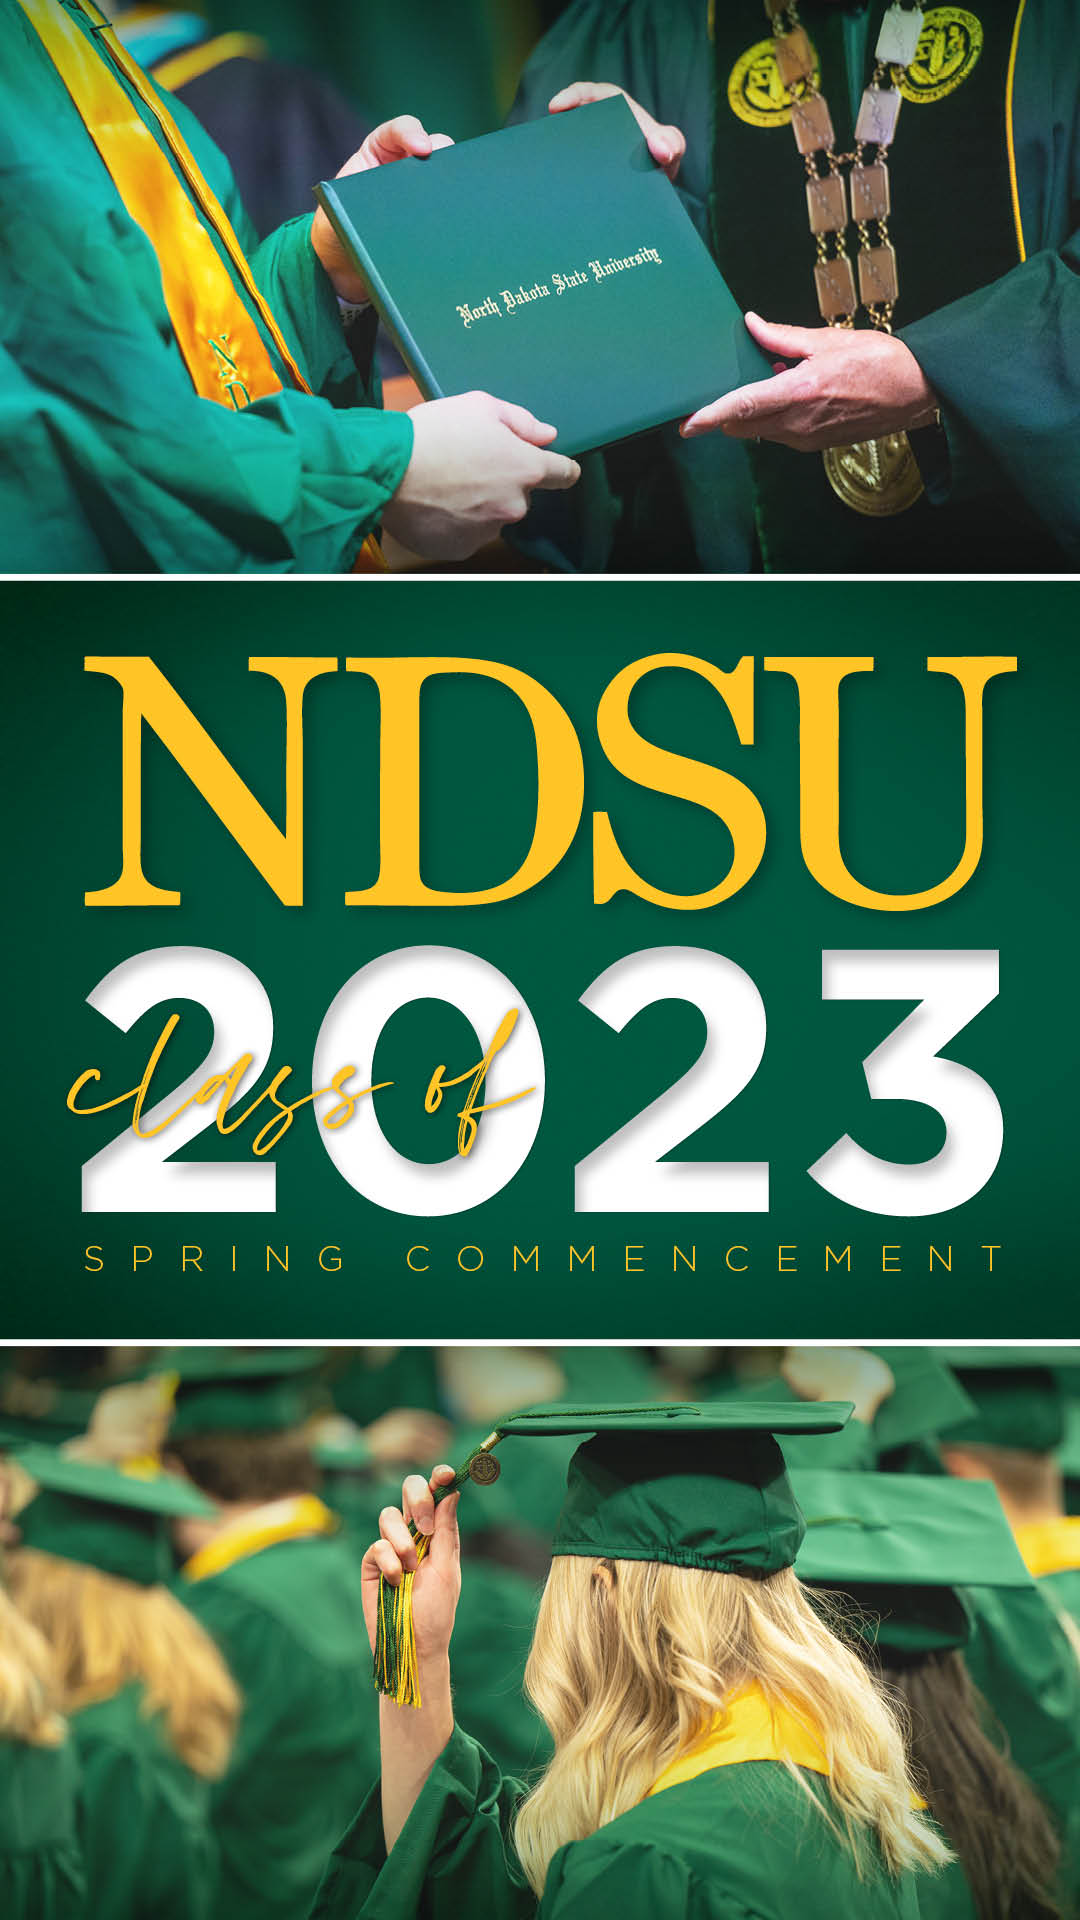 Commencement Celebration North Dakota State University